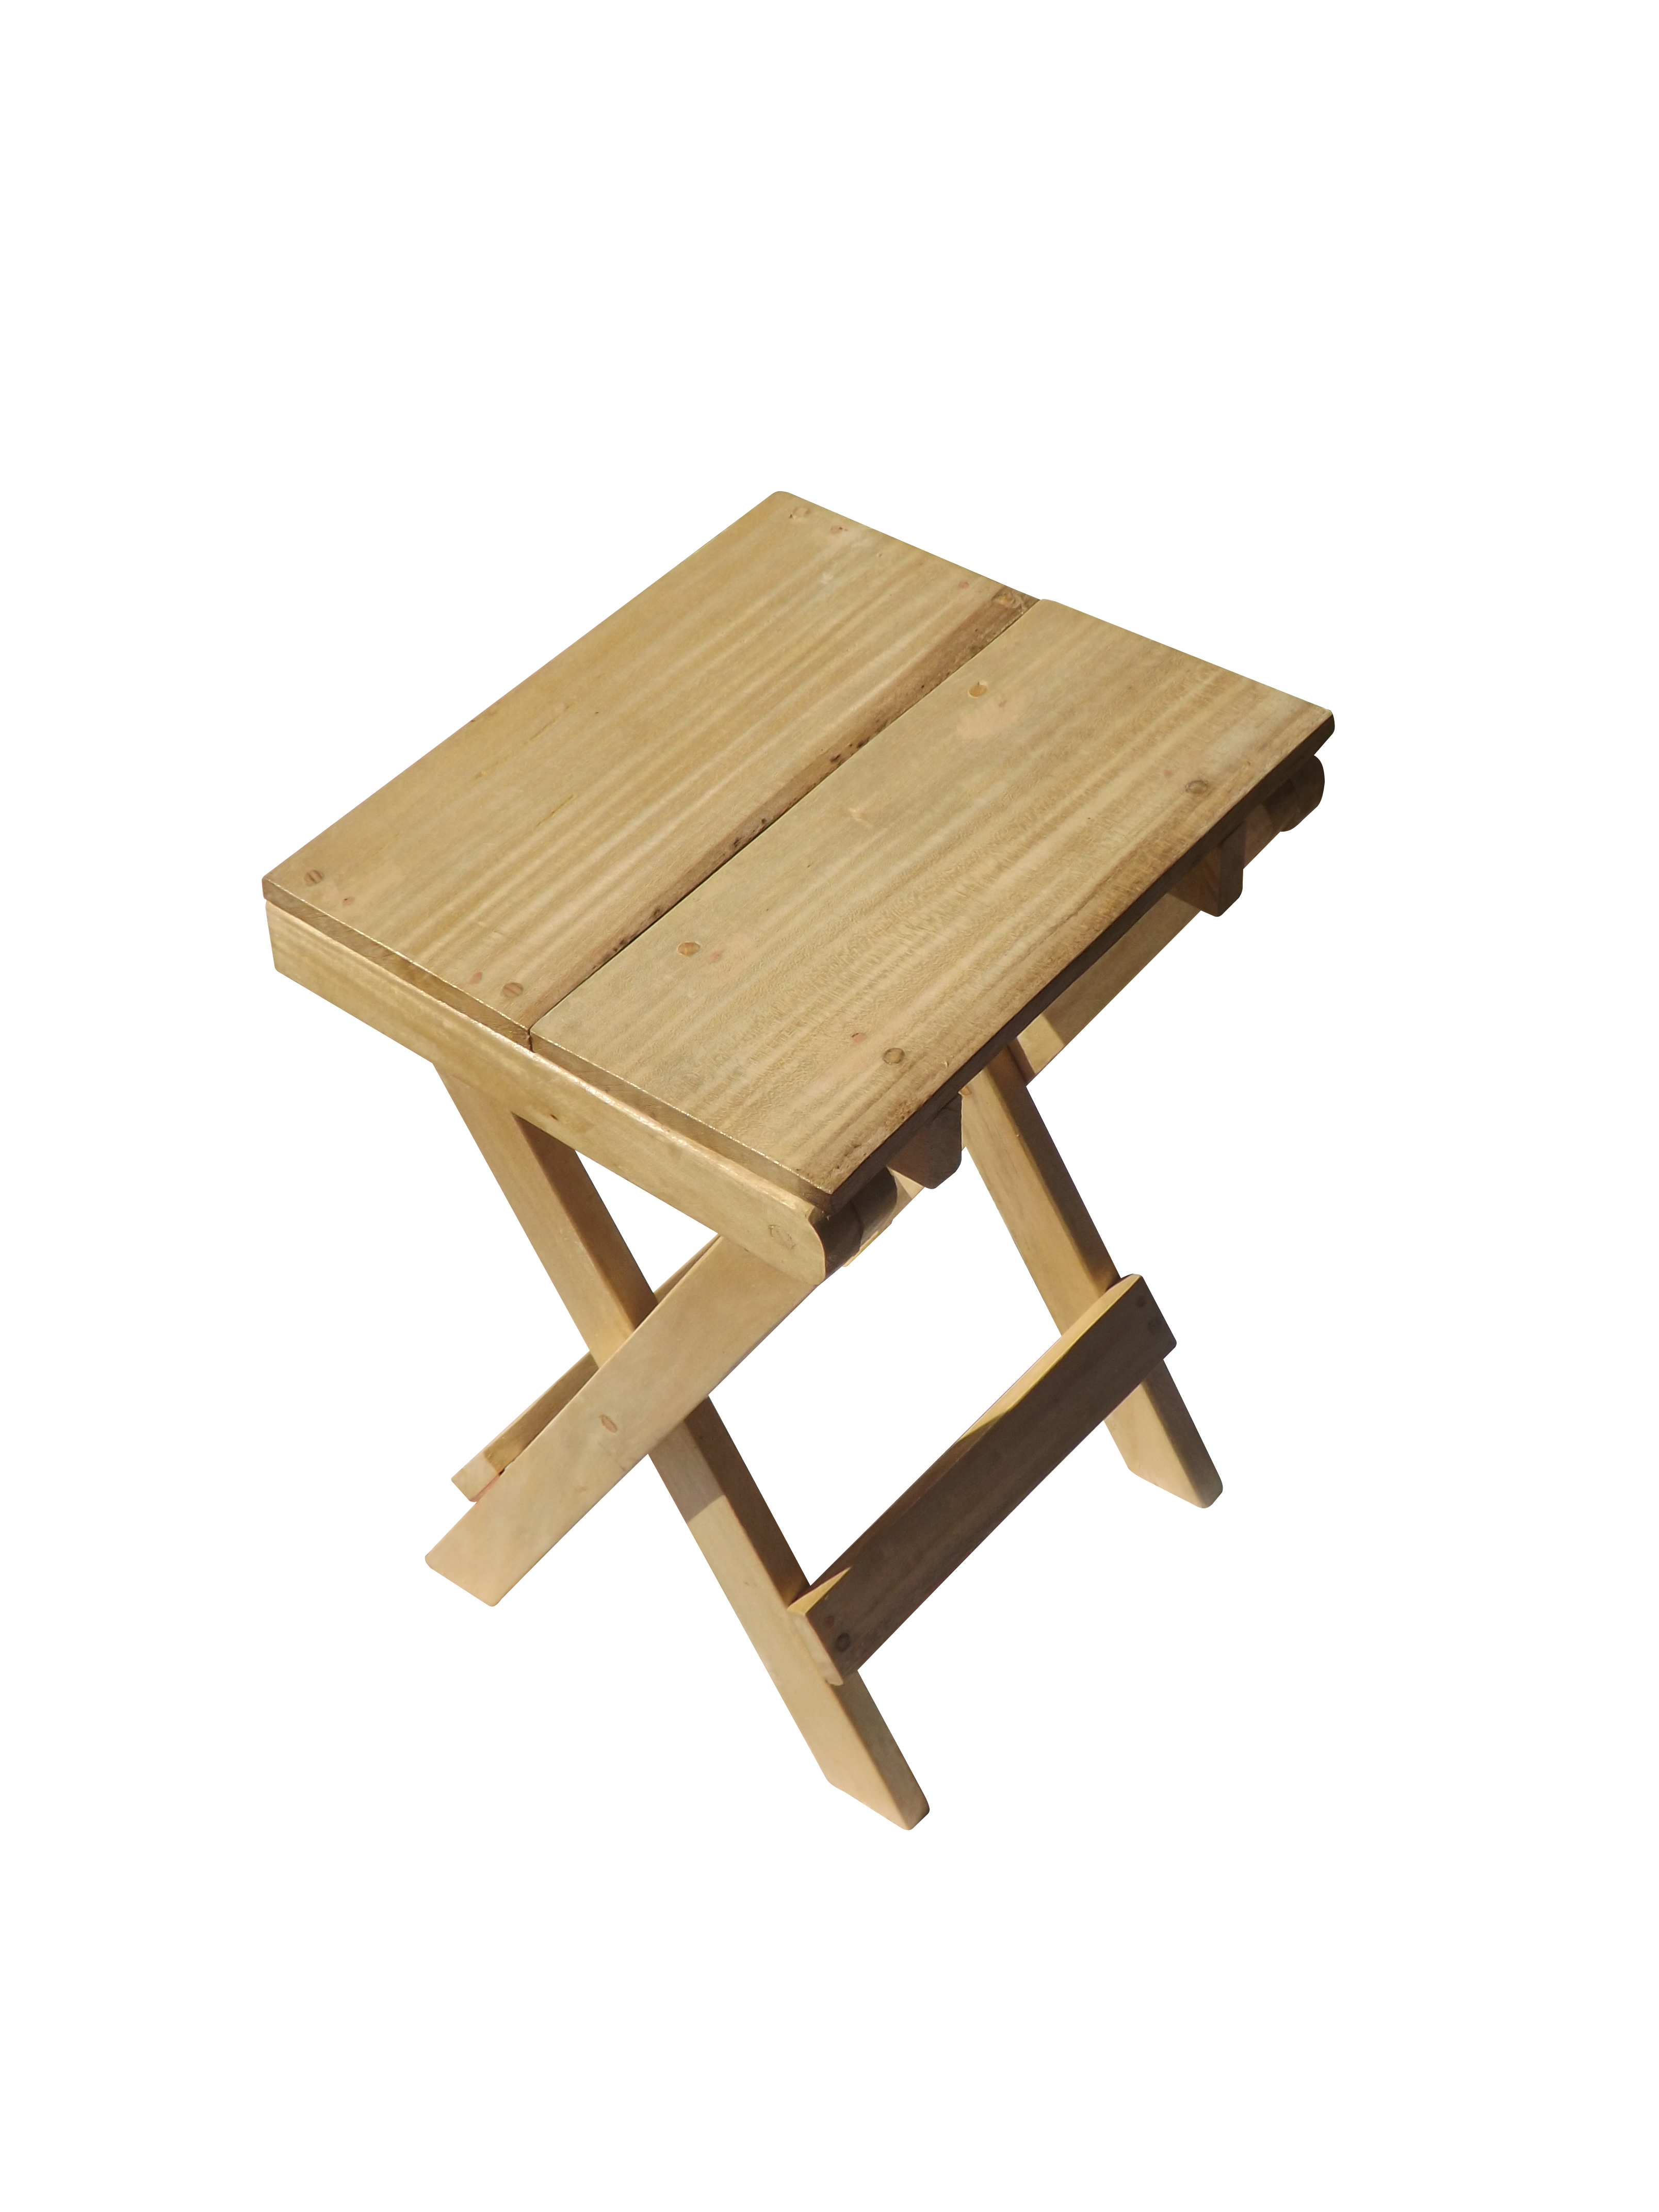 Folding Hardwood Stool or Side Table